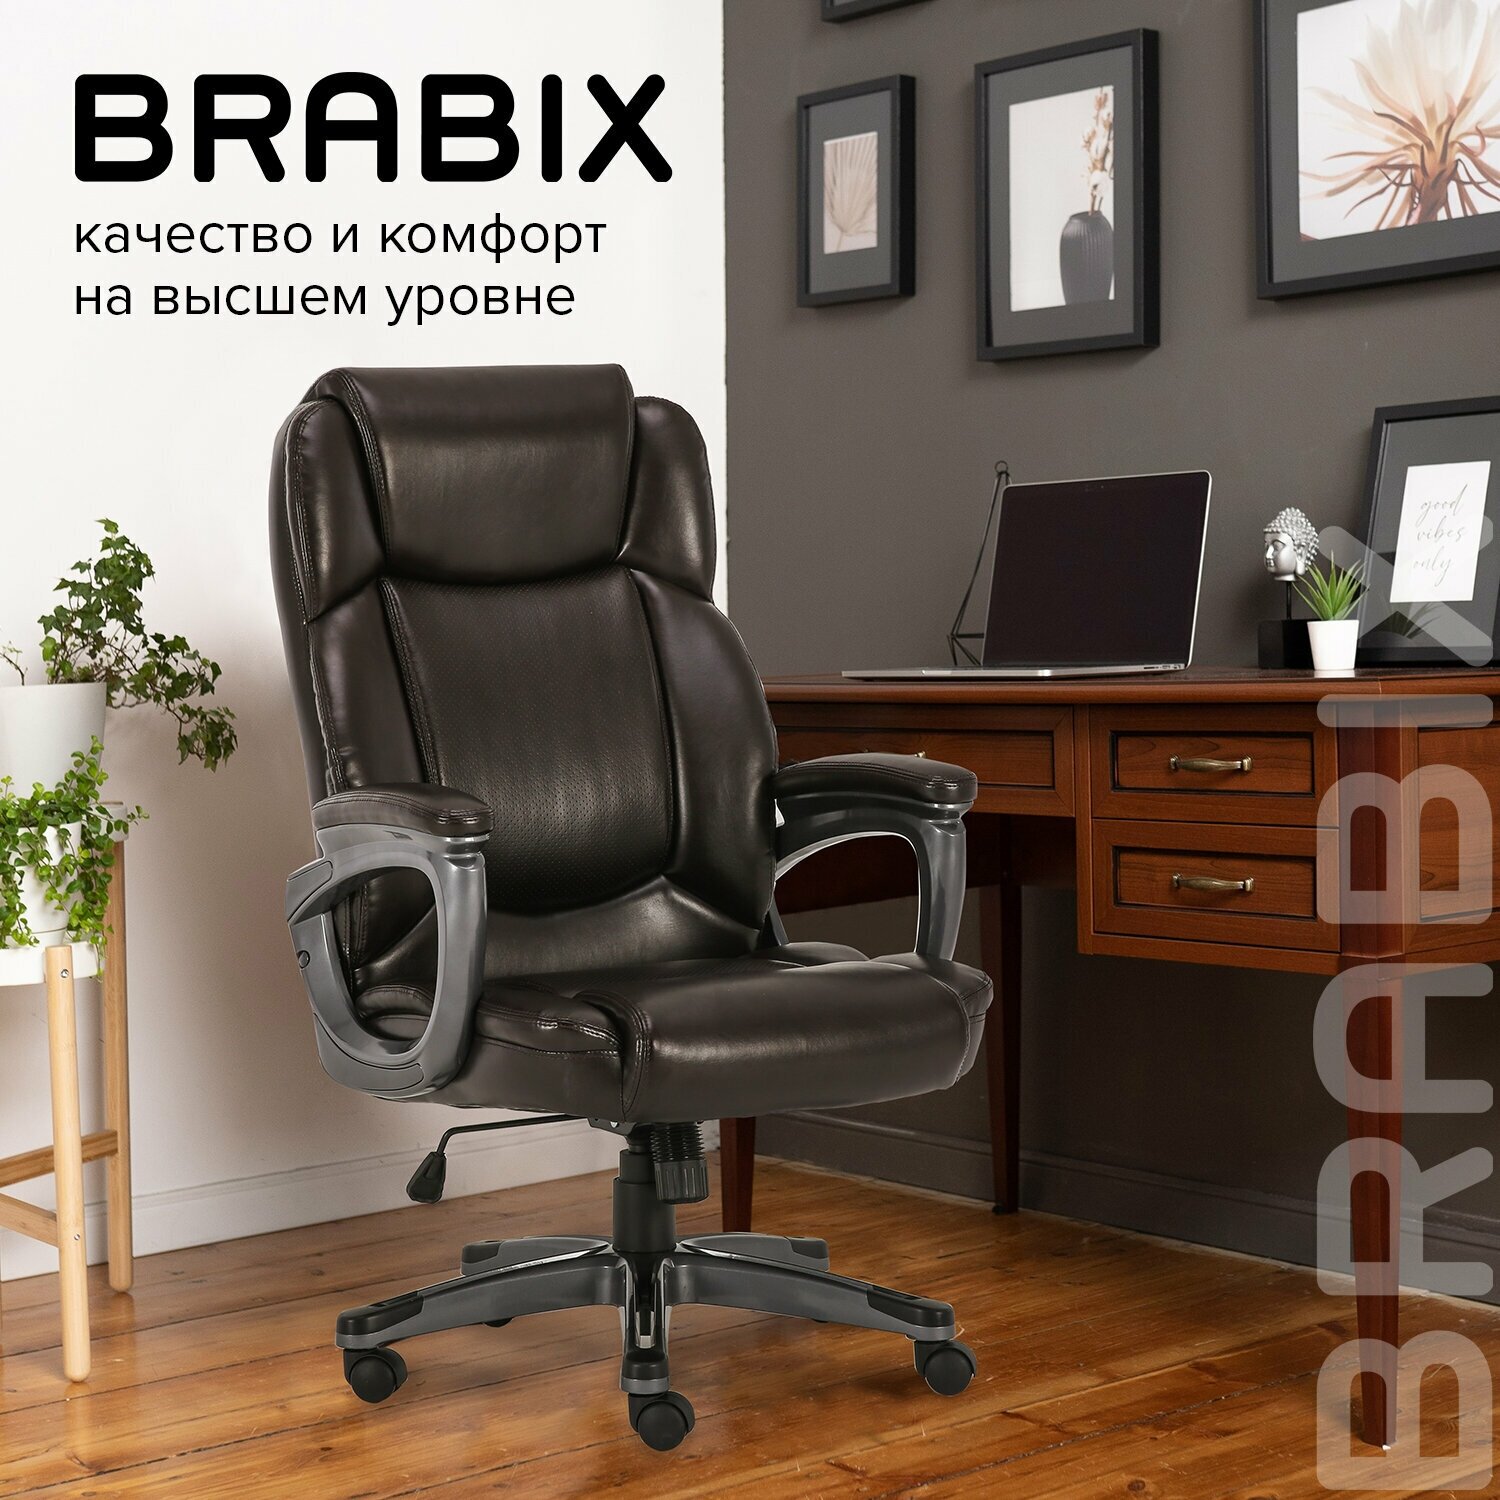 Кресло офисное Brabix - фото №15